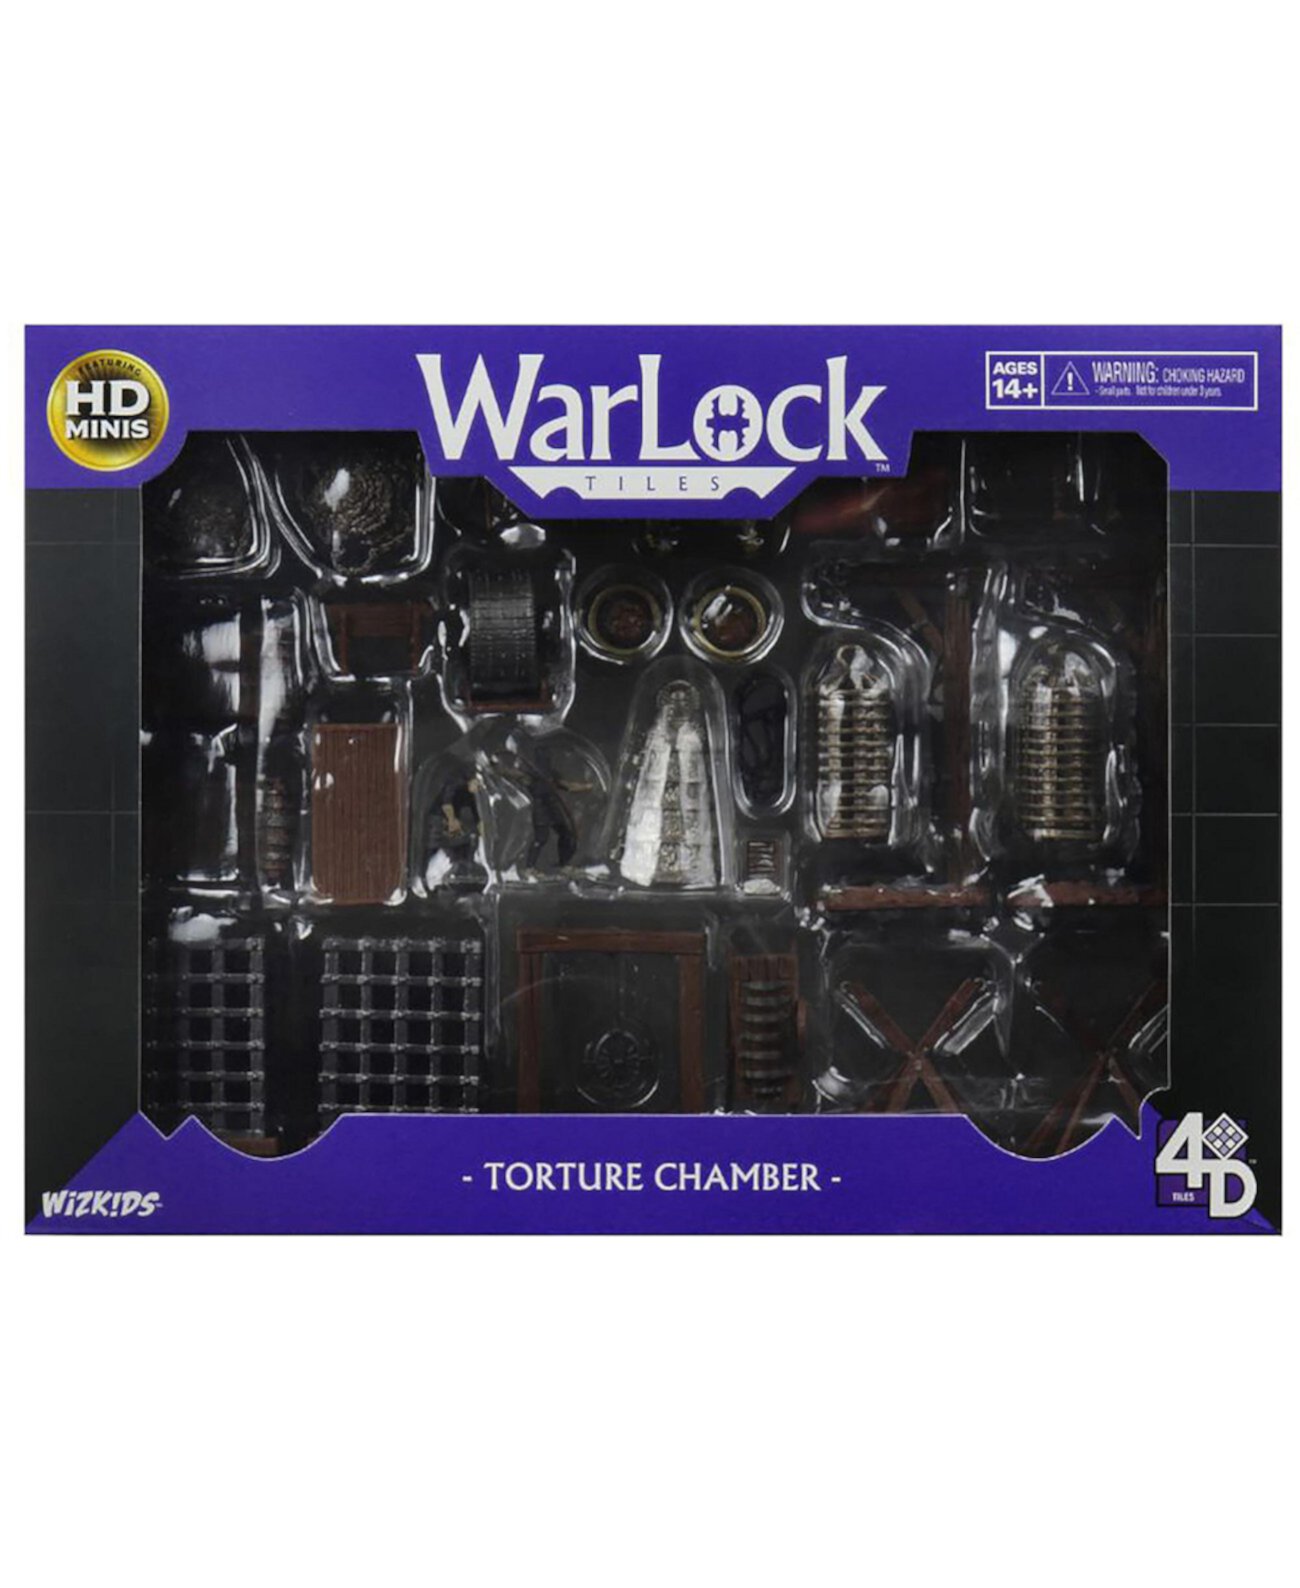 WarLock Tiles Torture Chamber Настольный ролевой аксессуар WizKids Games